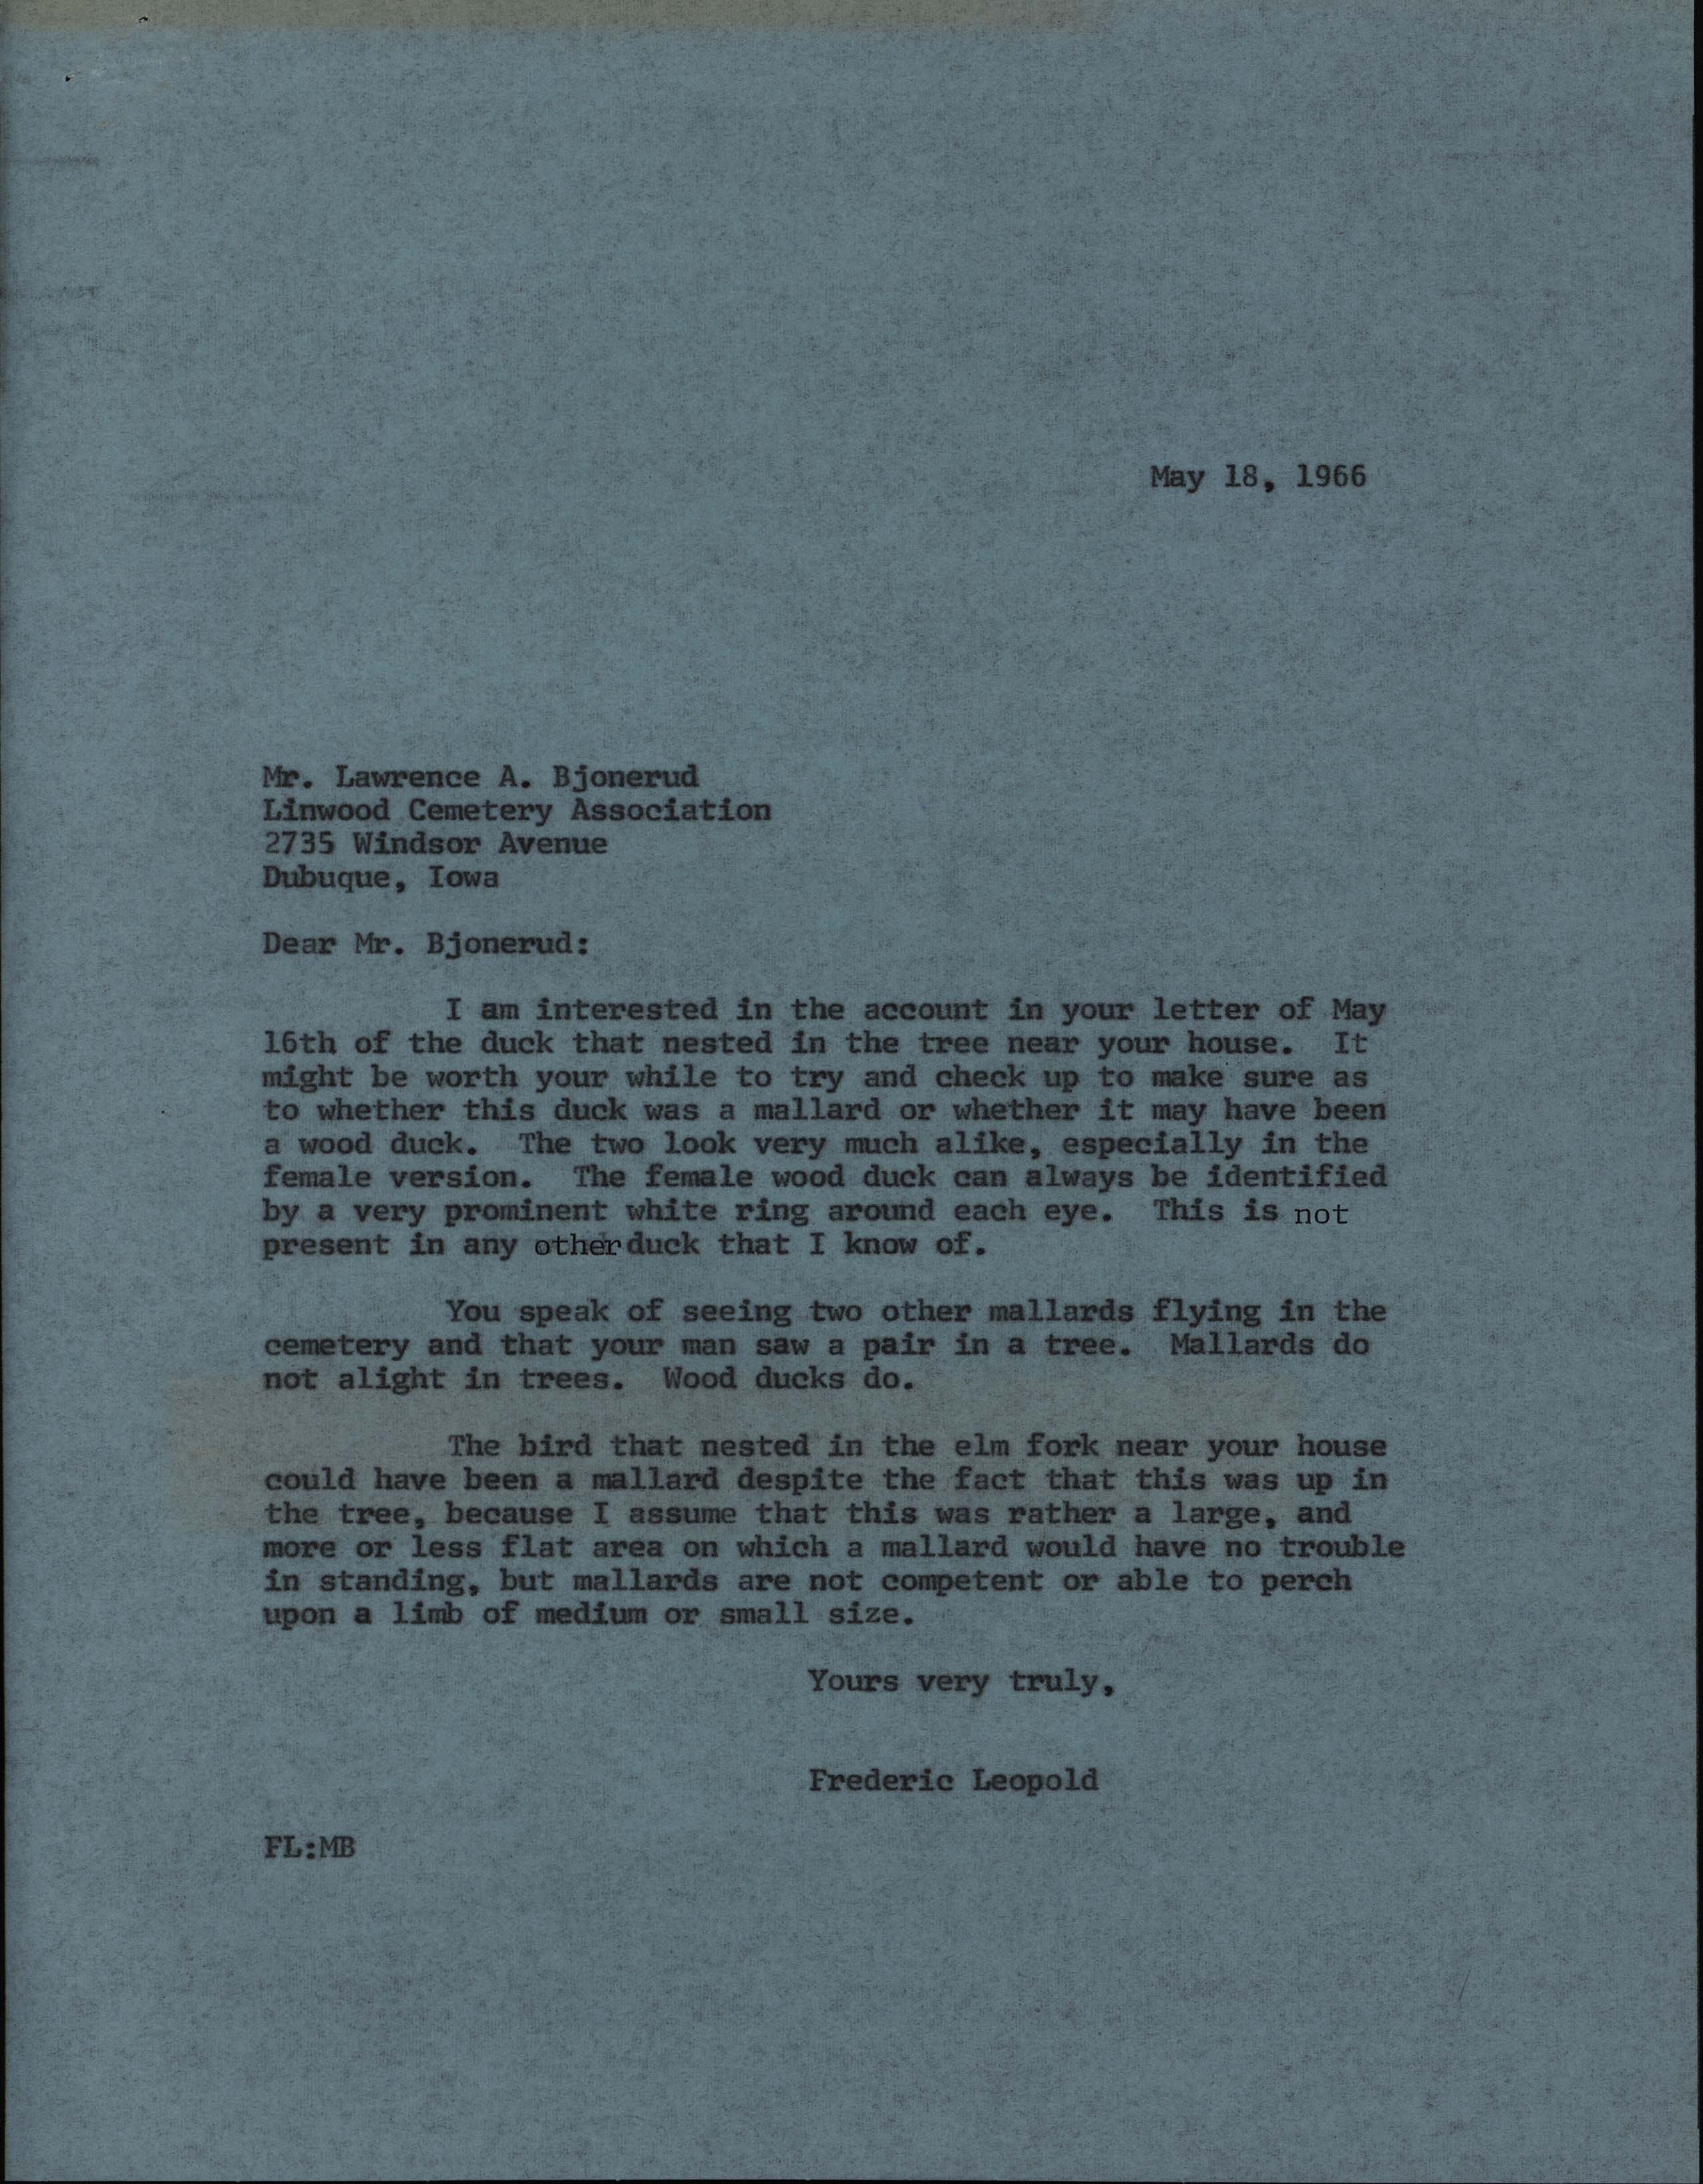 Frederic Leopold letter to Lawrence A. Bjonerud regarding identifying Wood Ducks, May 18, 1966